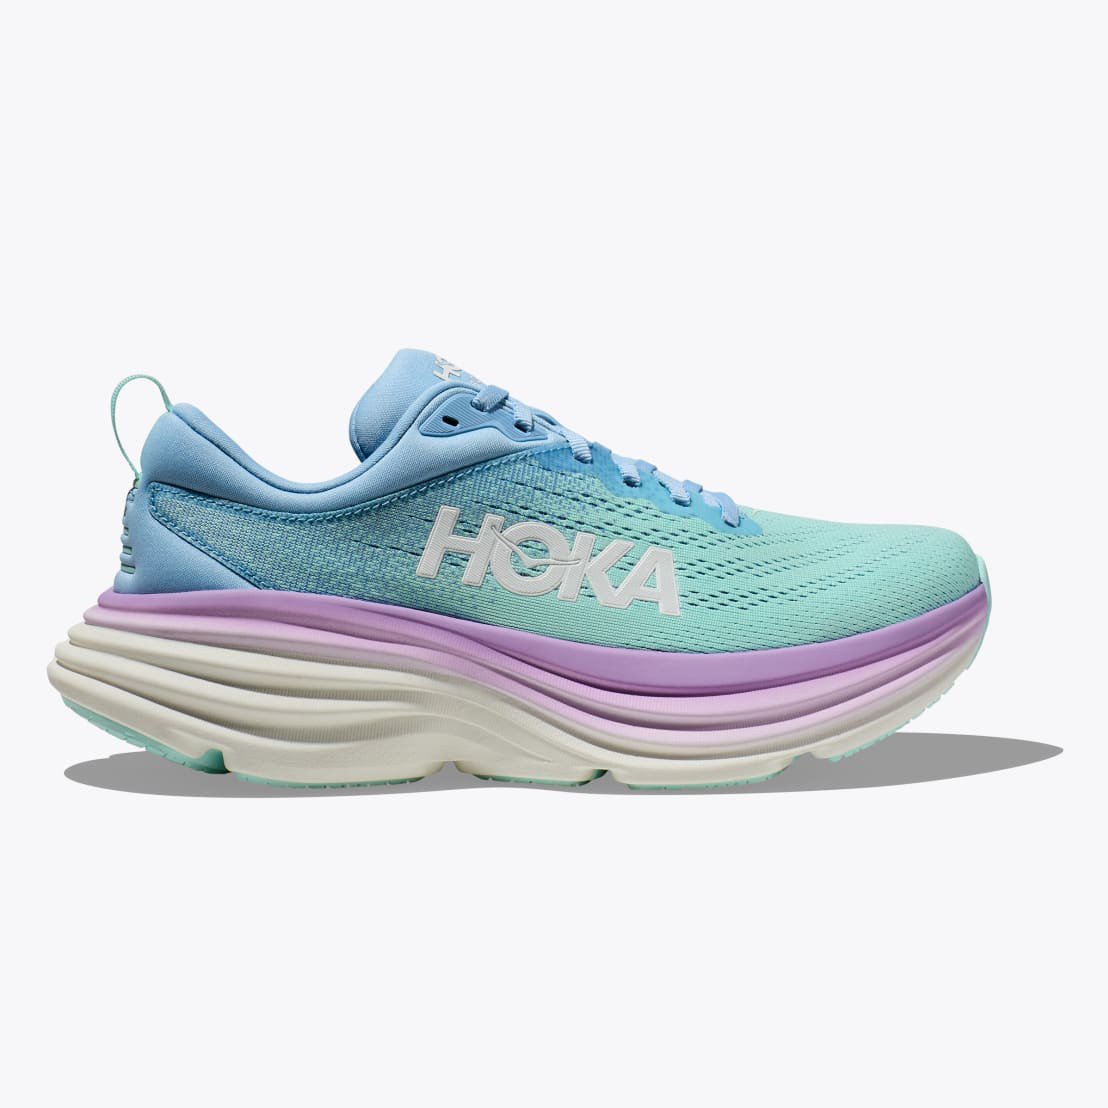 the Hoka Bondi 8 sneaker in white, blue and purple with white 'Hoka' logo